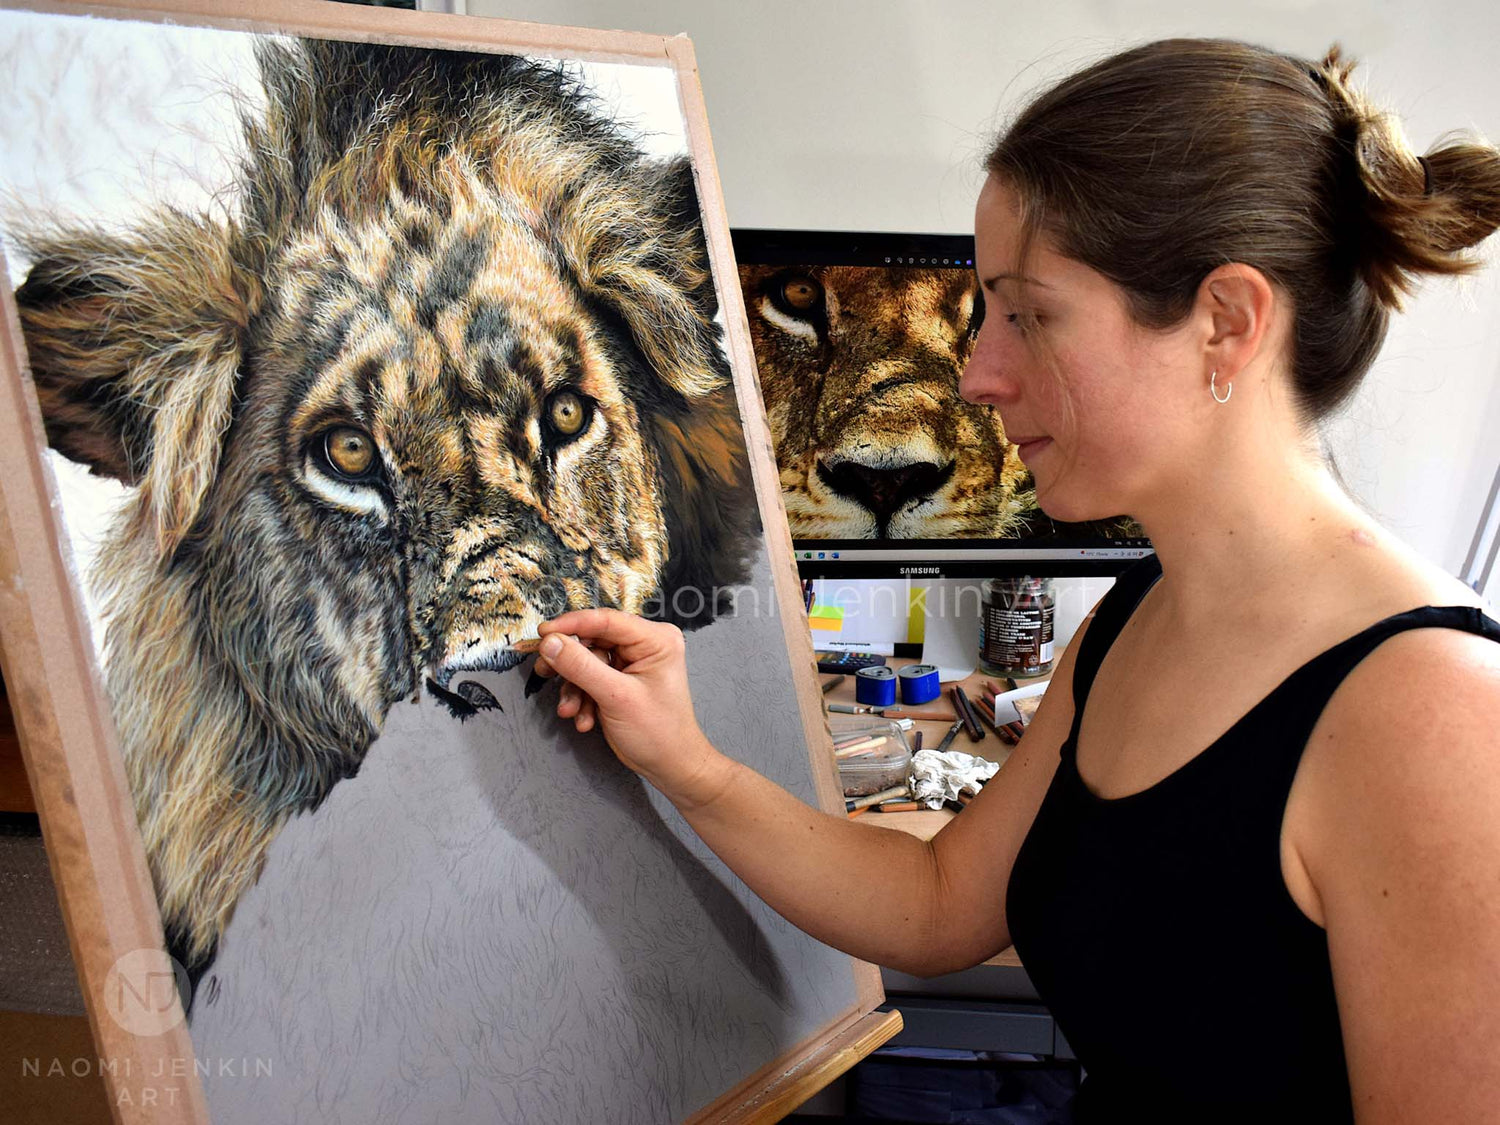 Wildlife artist Naomi Jenkin with original pastel lion painting "Warrior"